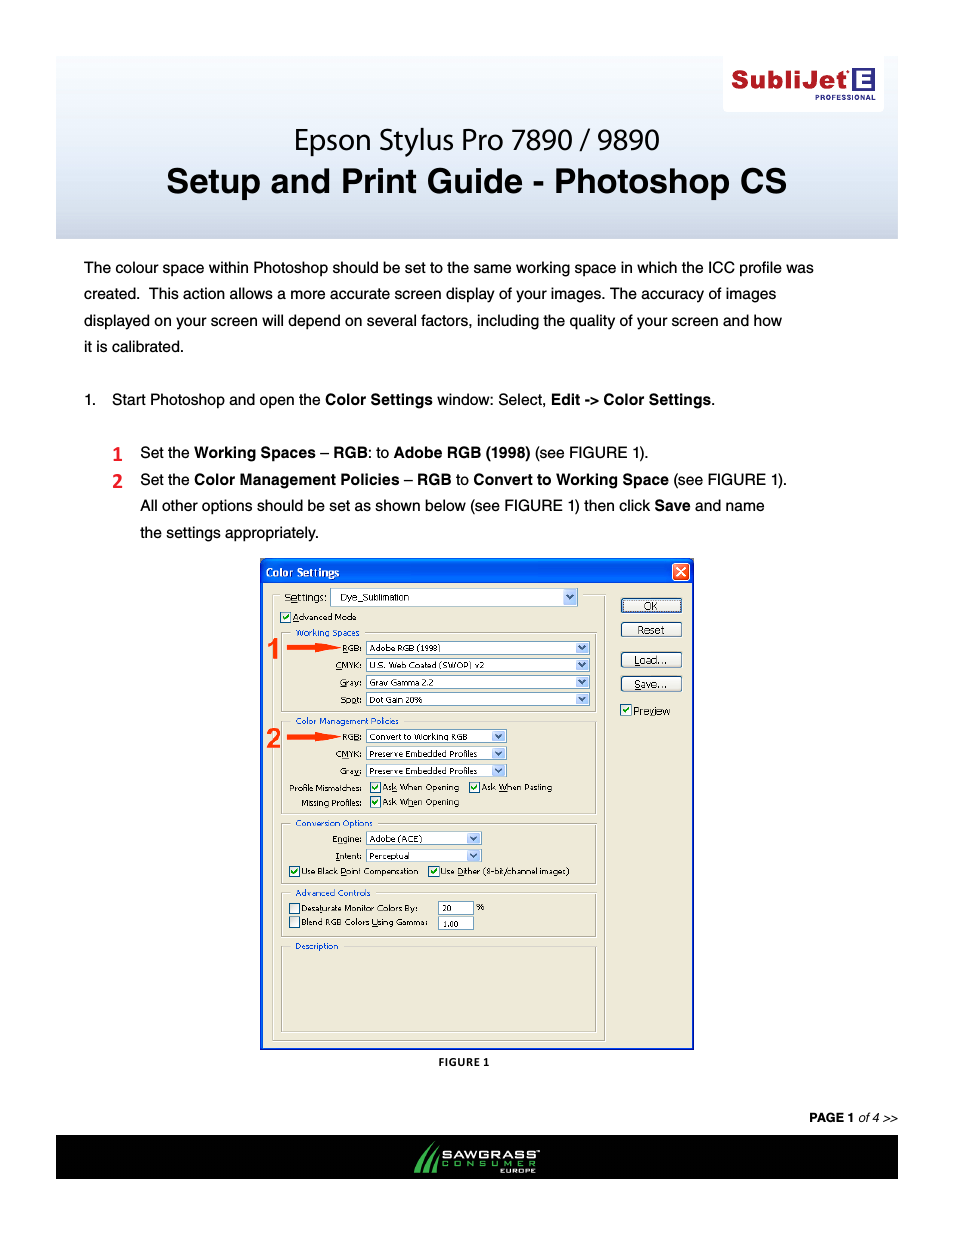 SubliJet E Epson Stylus Pro 7890 (Windows ICC Profile Setup): Print & Setup Guide Photoshop CS